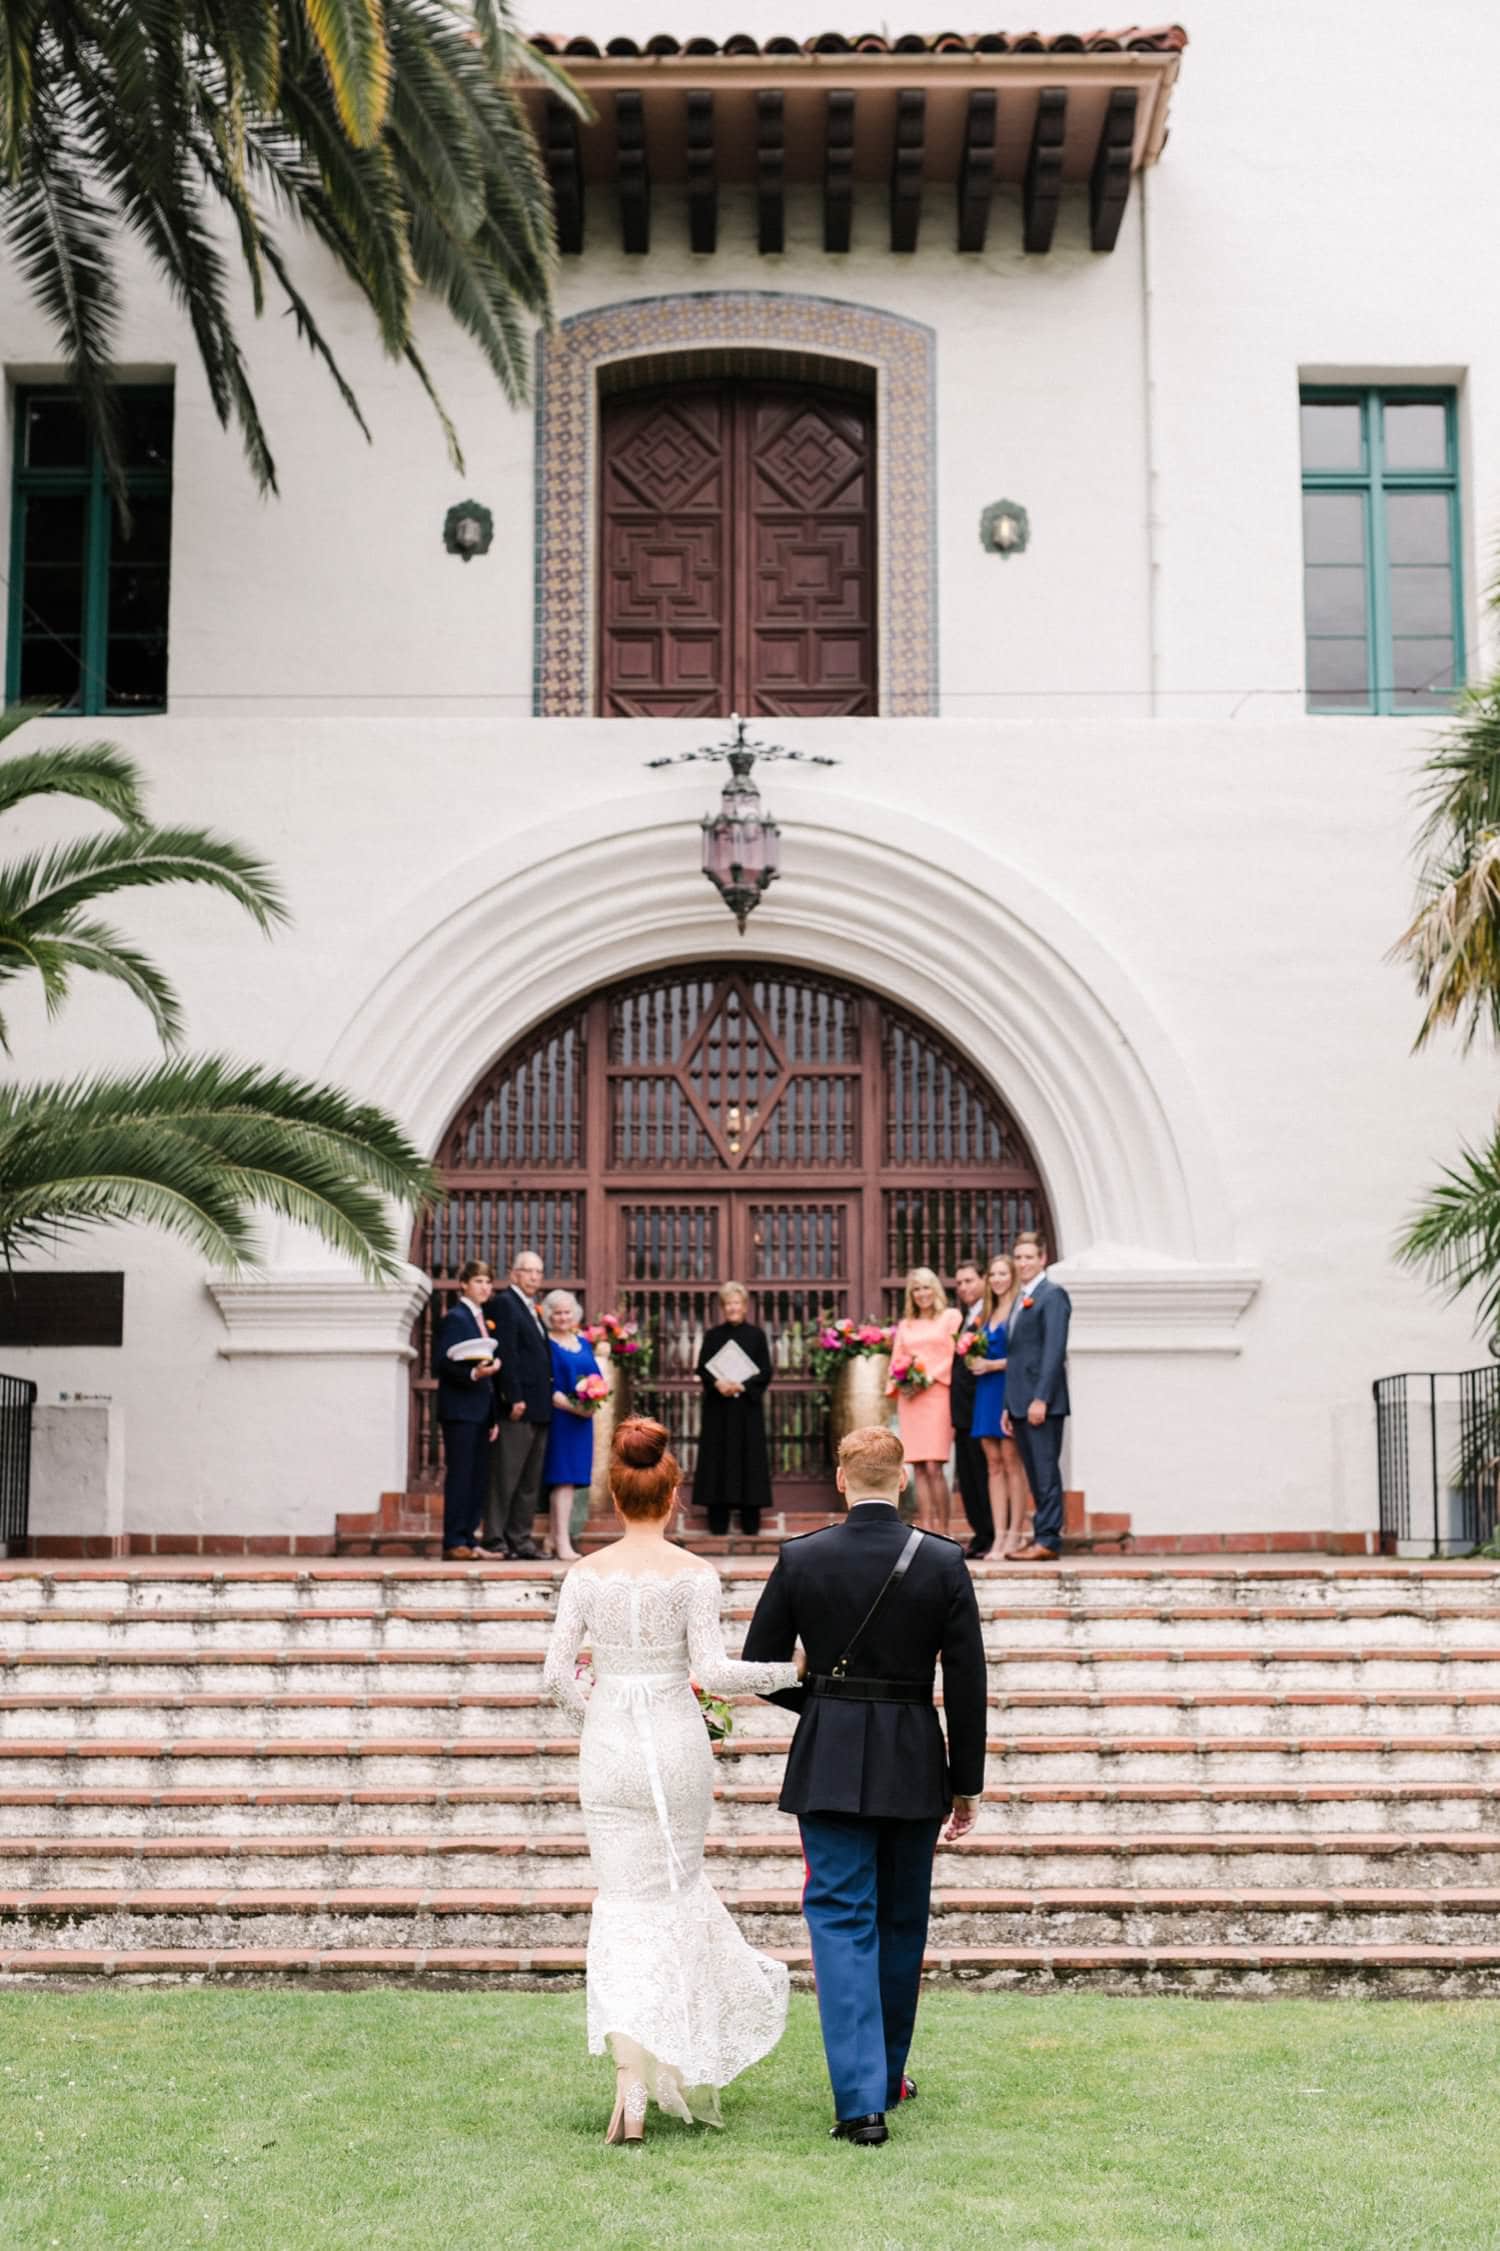 Santa Barbara Courthouse elopement photos